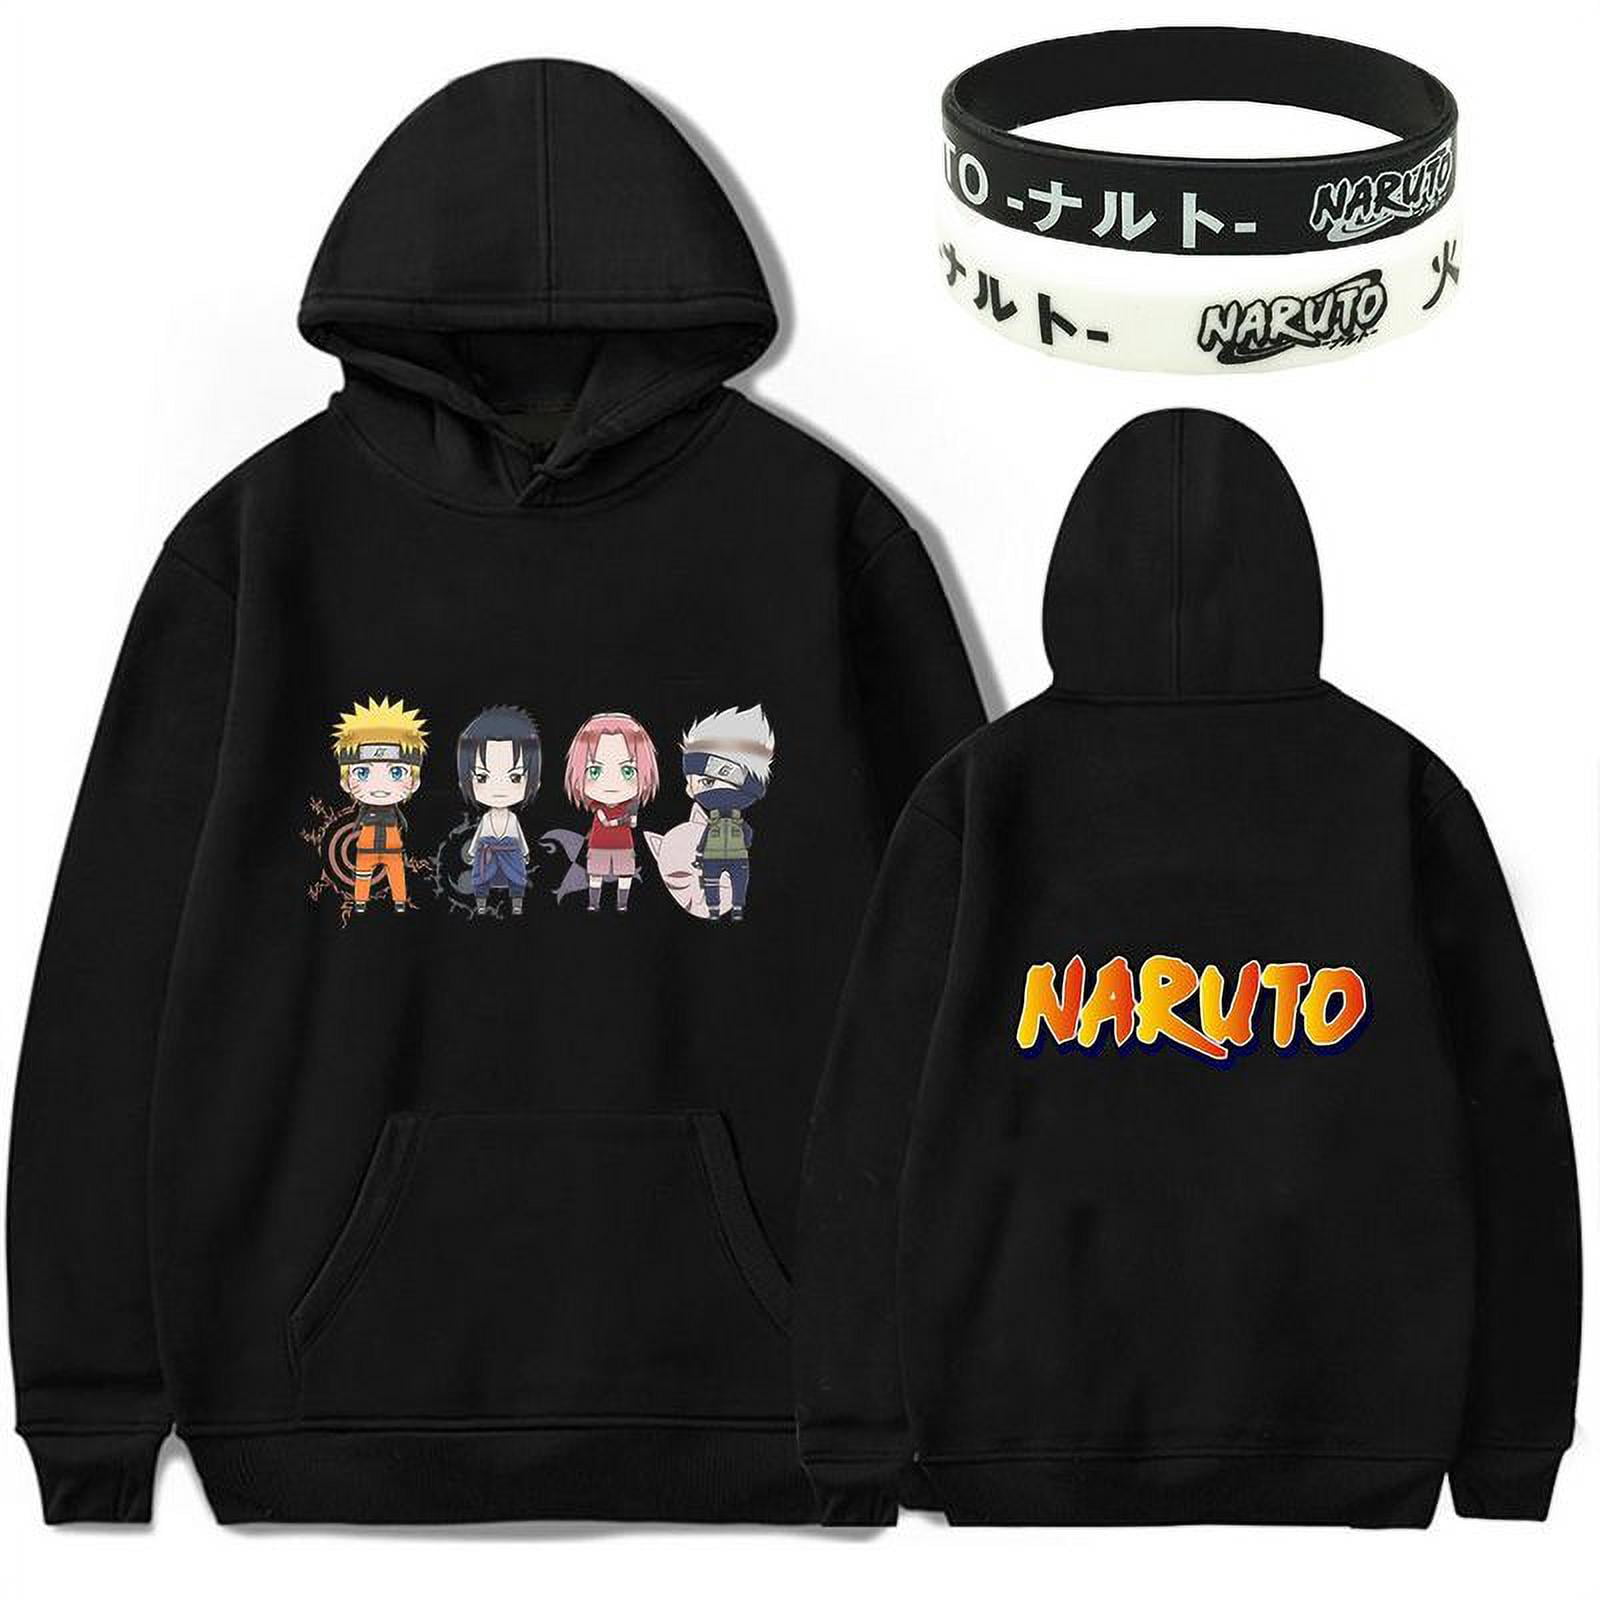 2pcs Naruto clothes Hoodie Sweatshirt Top Sweatpants Clothes cotton hoodies 